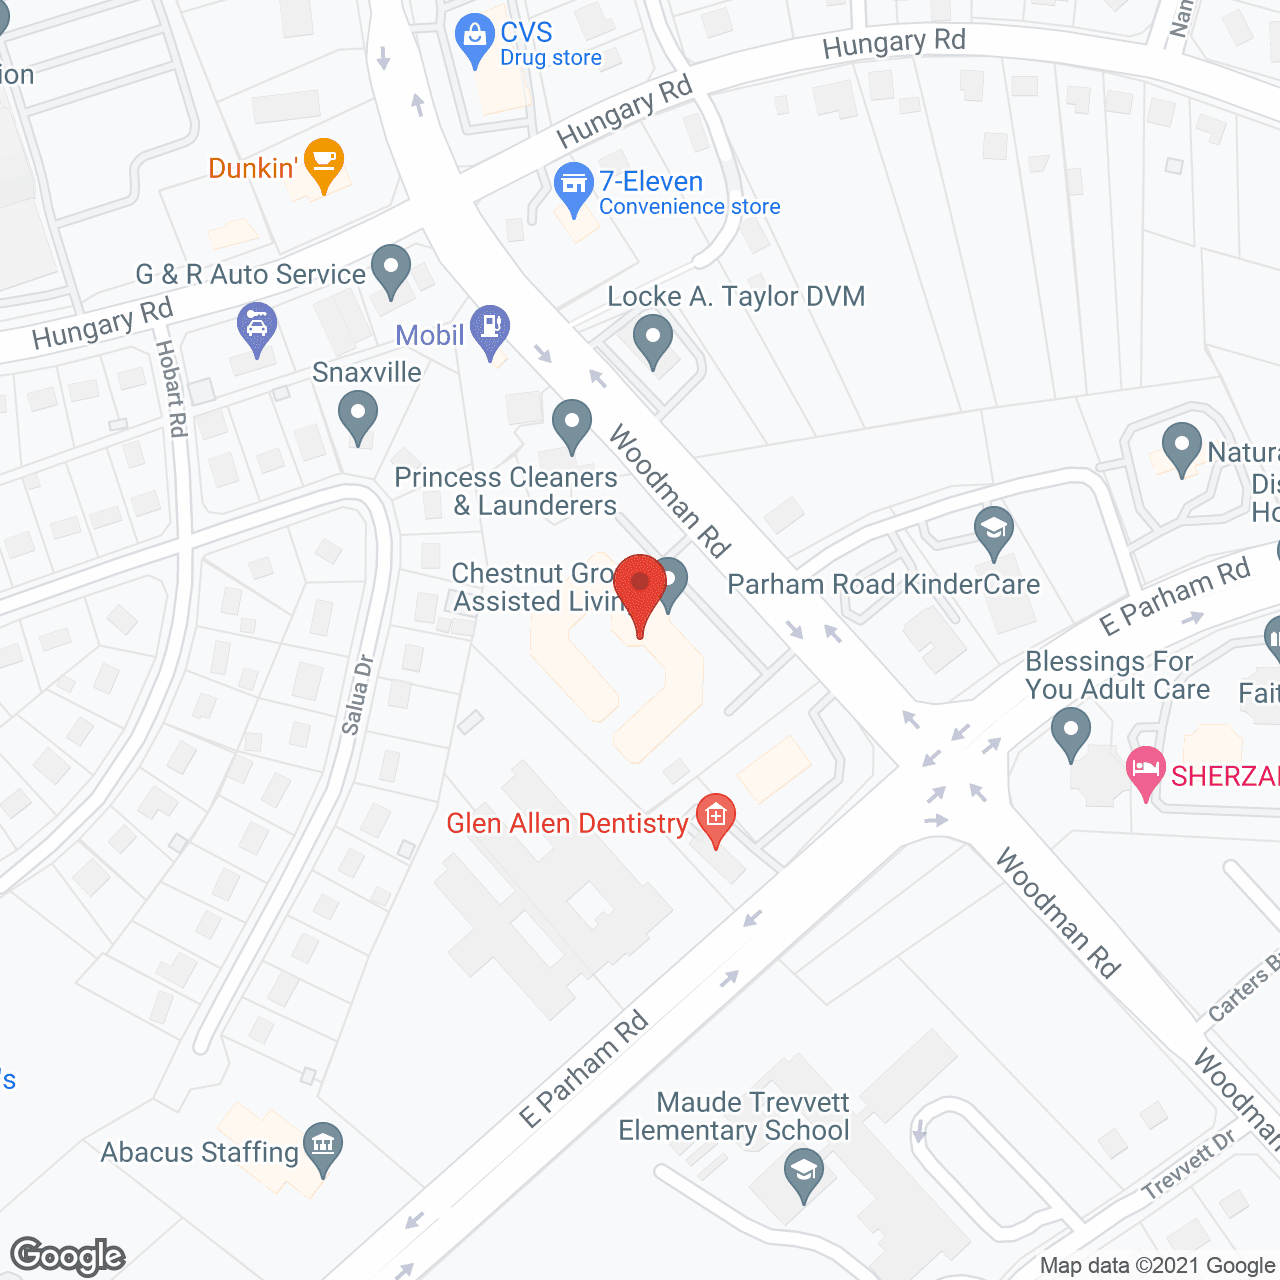 Chestnut Grove in google map